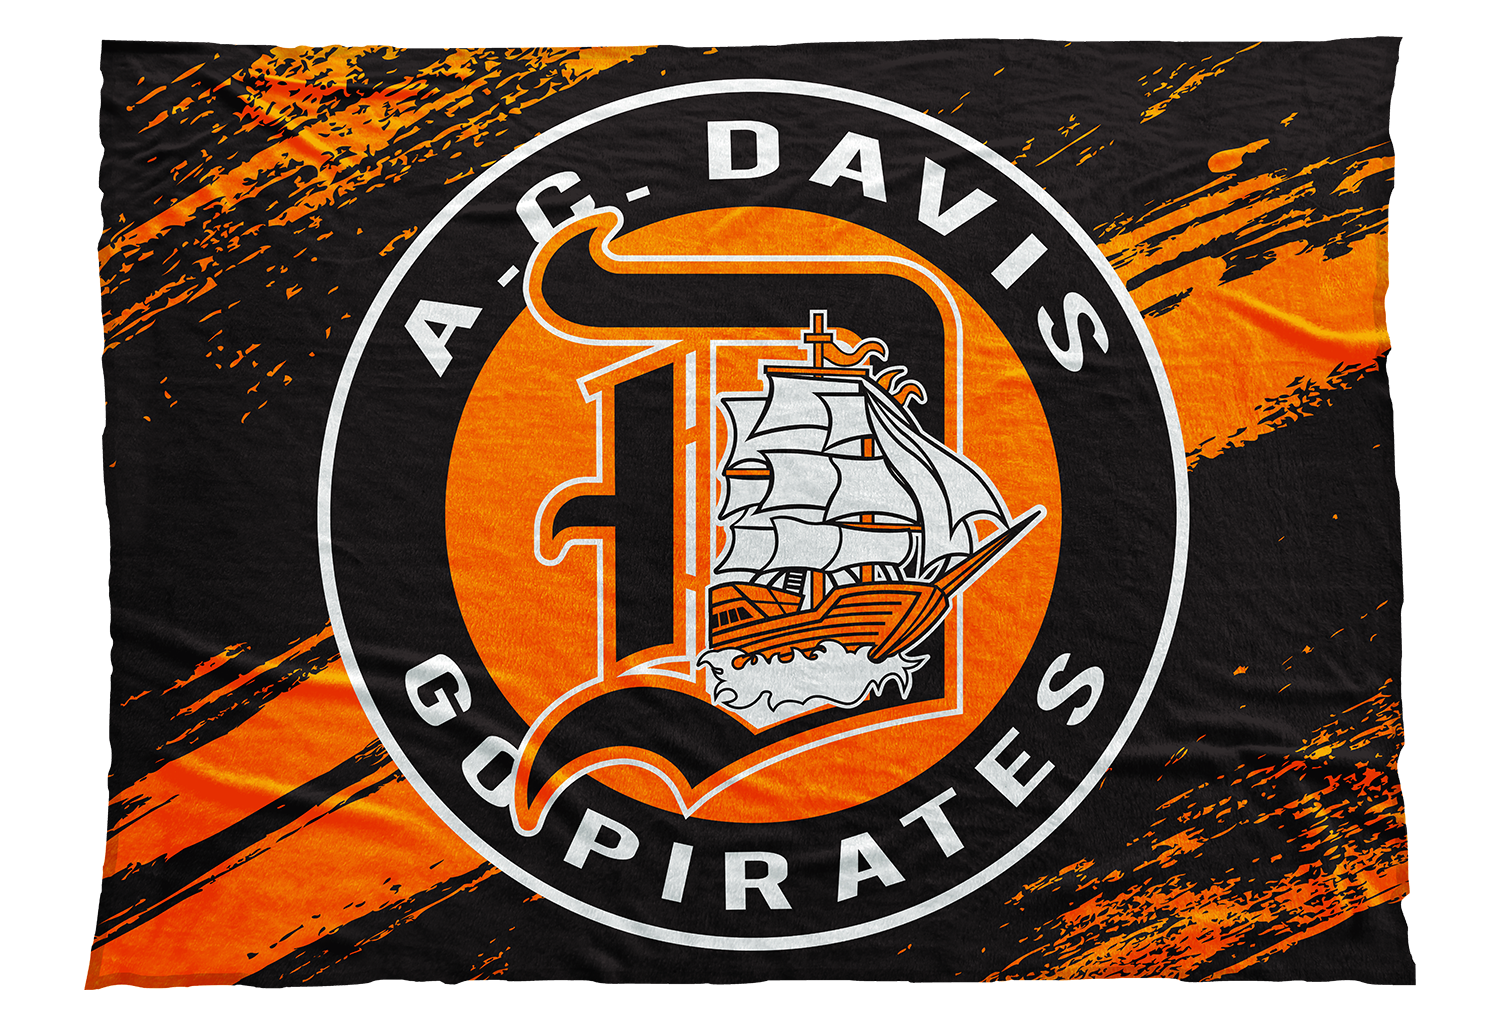 A.C. Davis Pirates